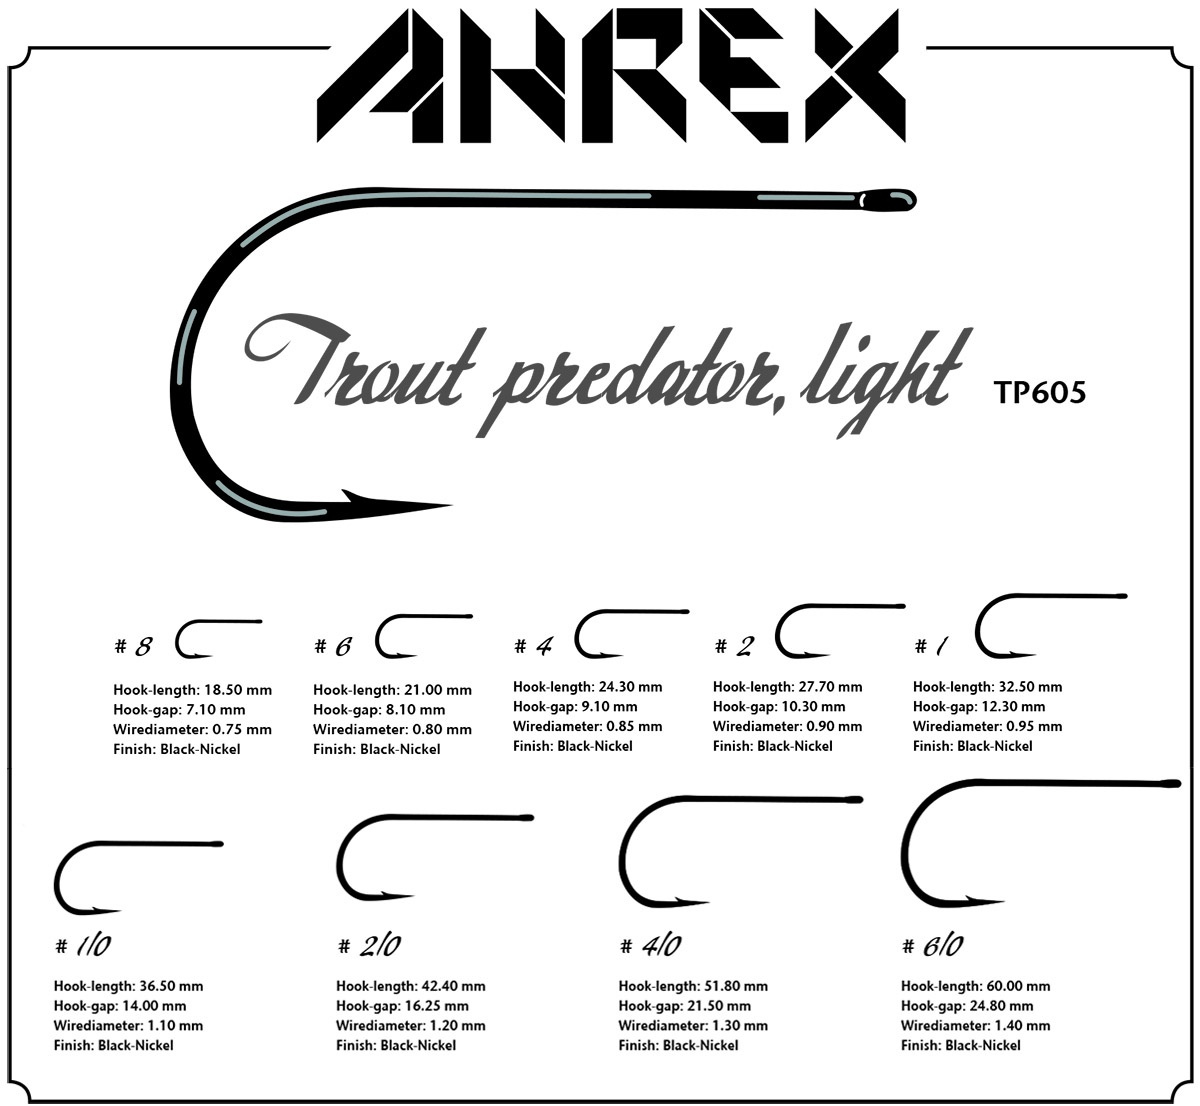 Ahrex TP605 Trout Predator Light 12-pack